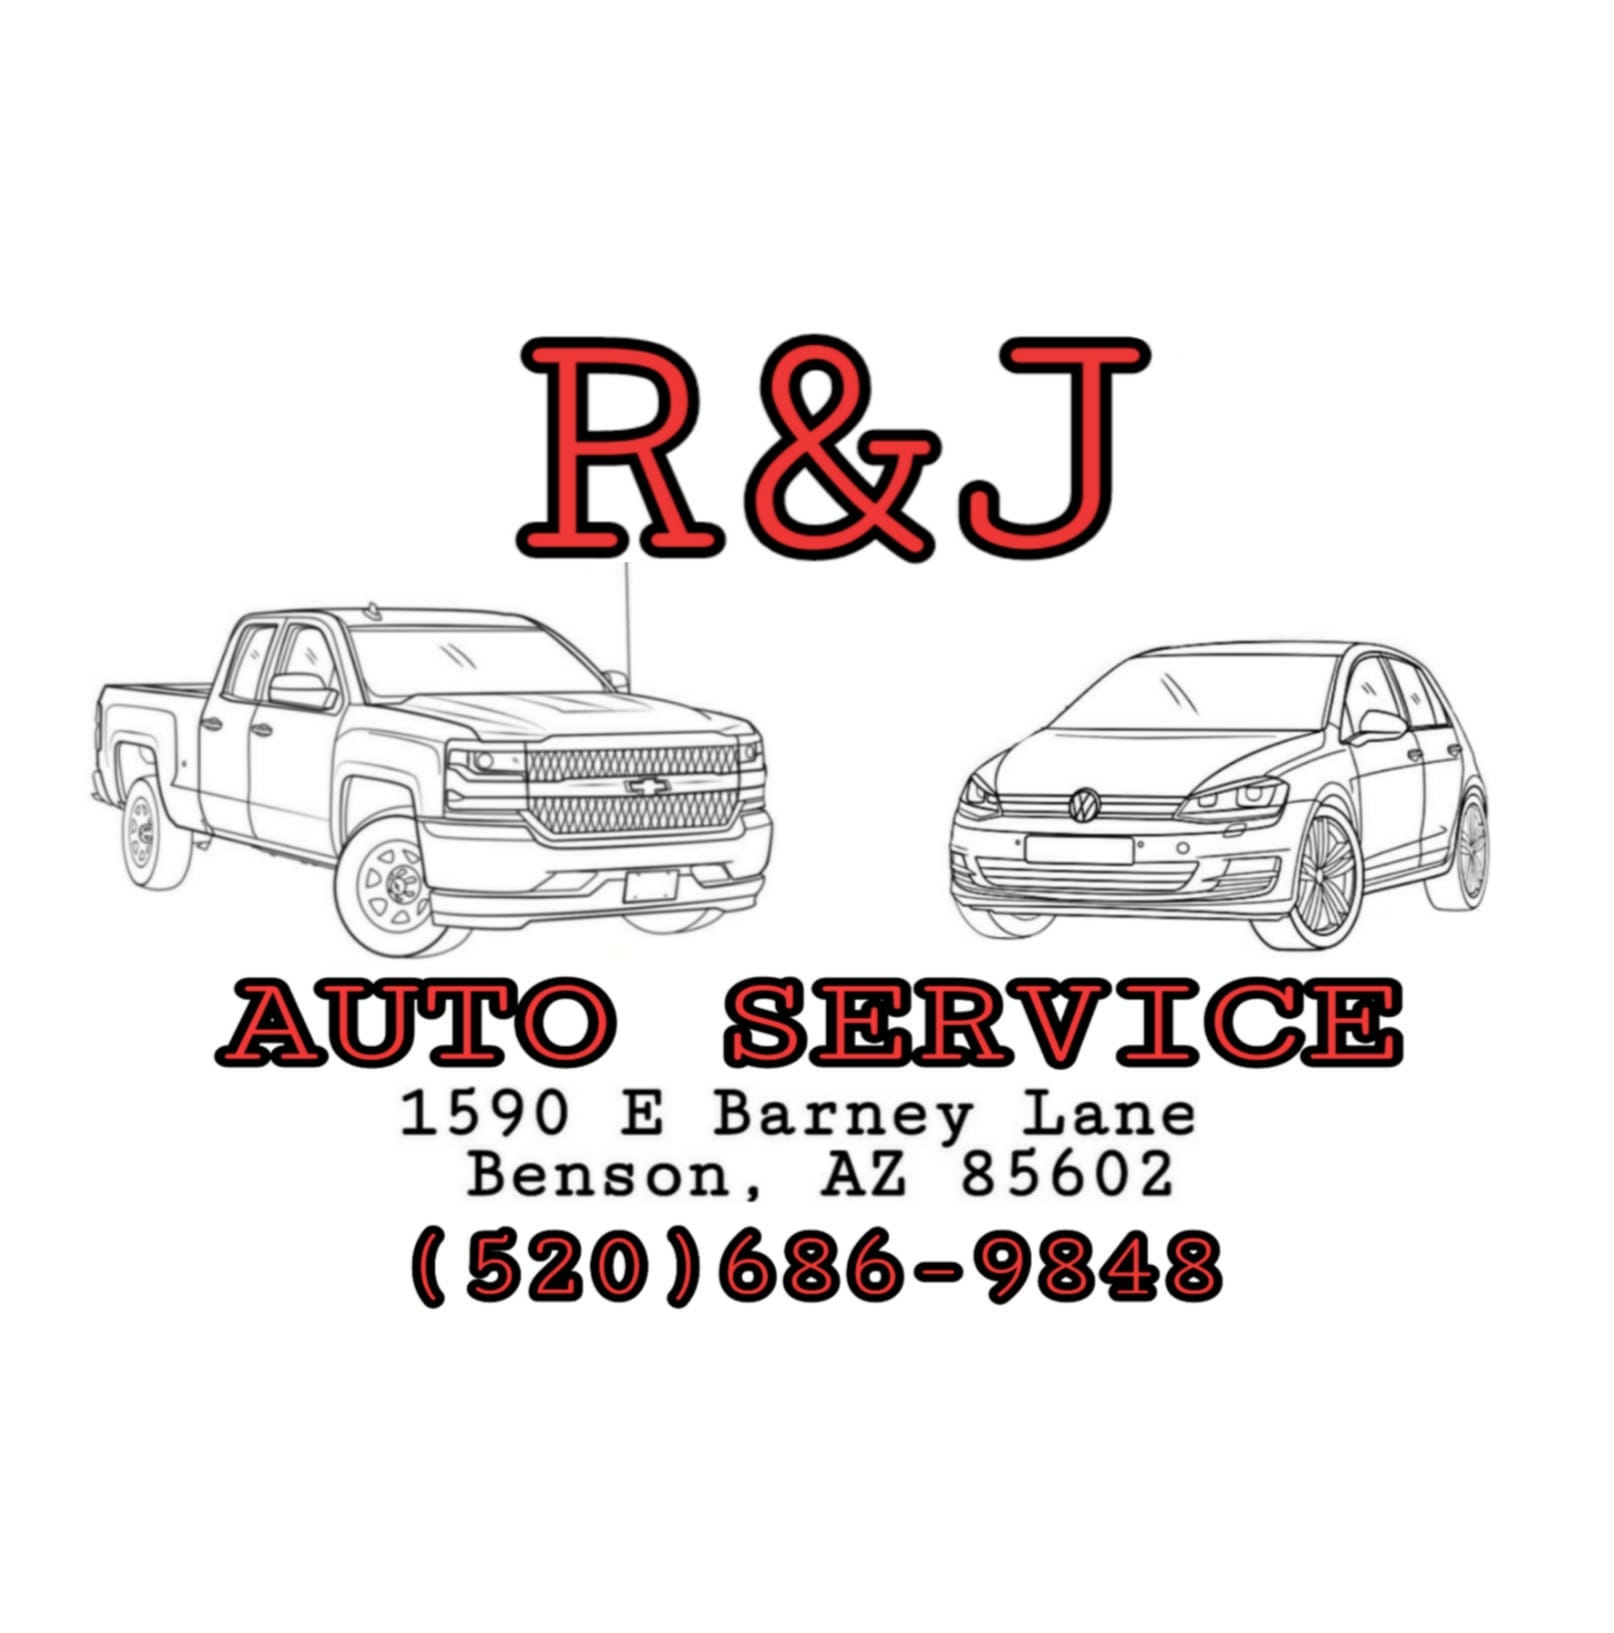 R&J AUTO SERVICE